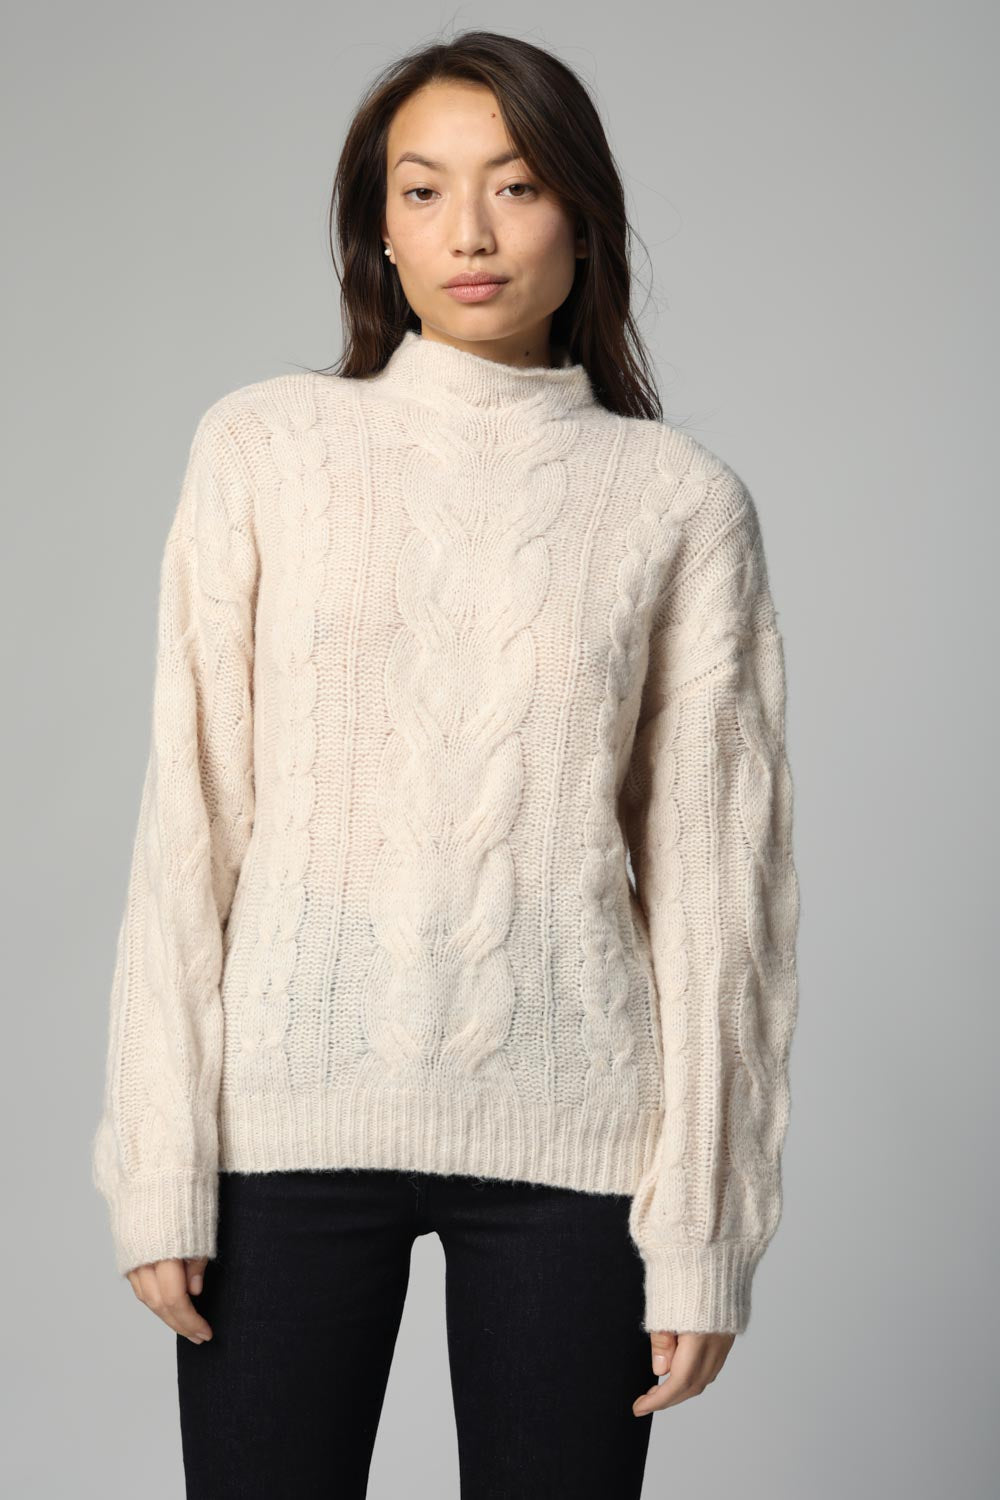 Braided Cream Knitted Sweater